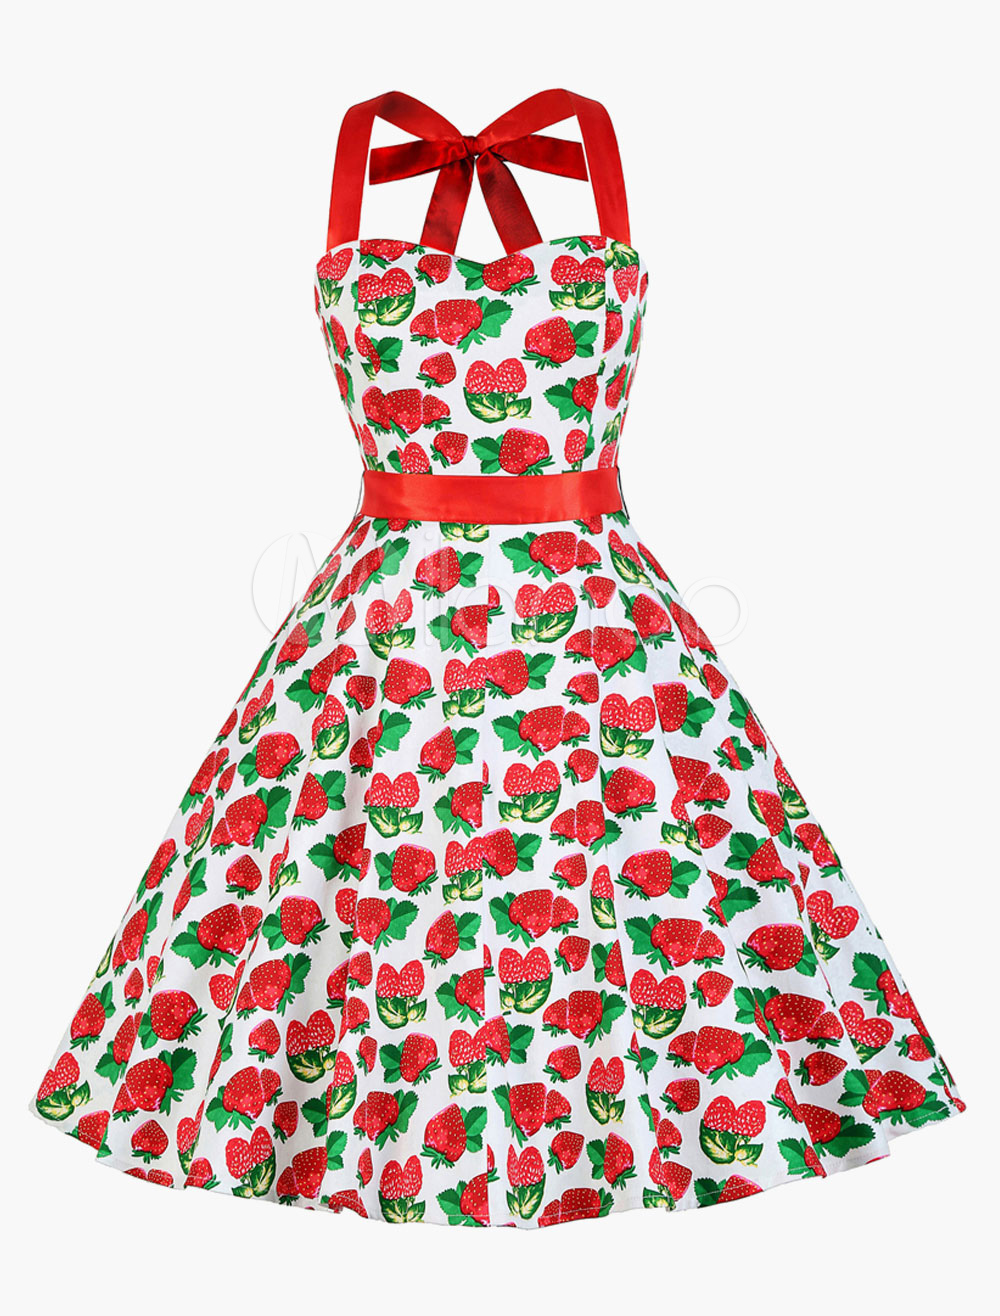 Cute Vintage Rockabilly Party Dress With Strawberry Print - Milanoo.com